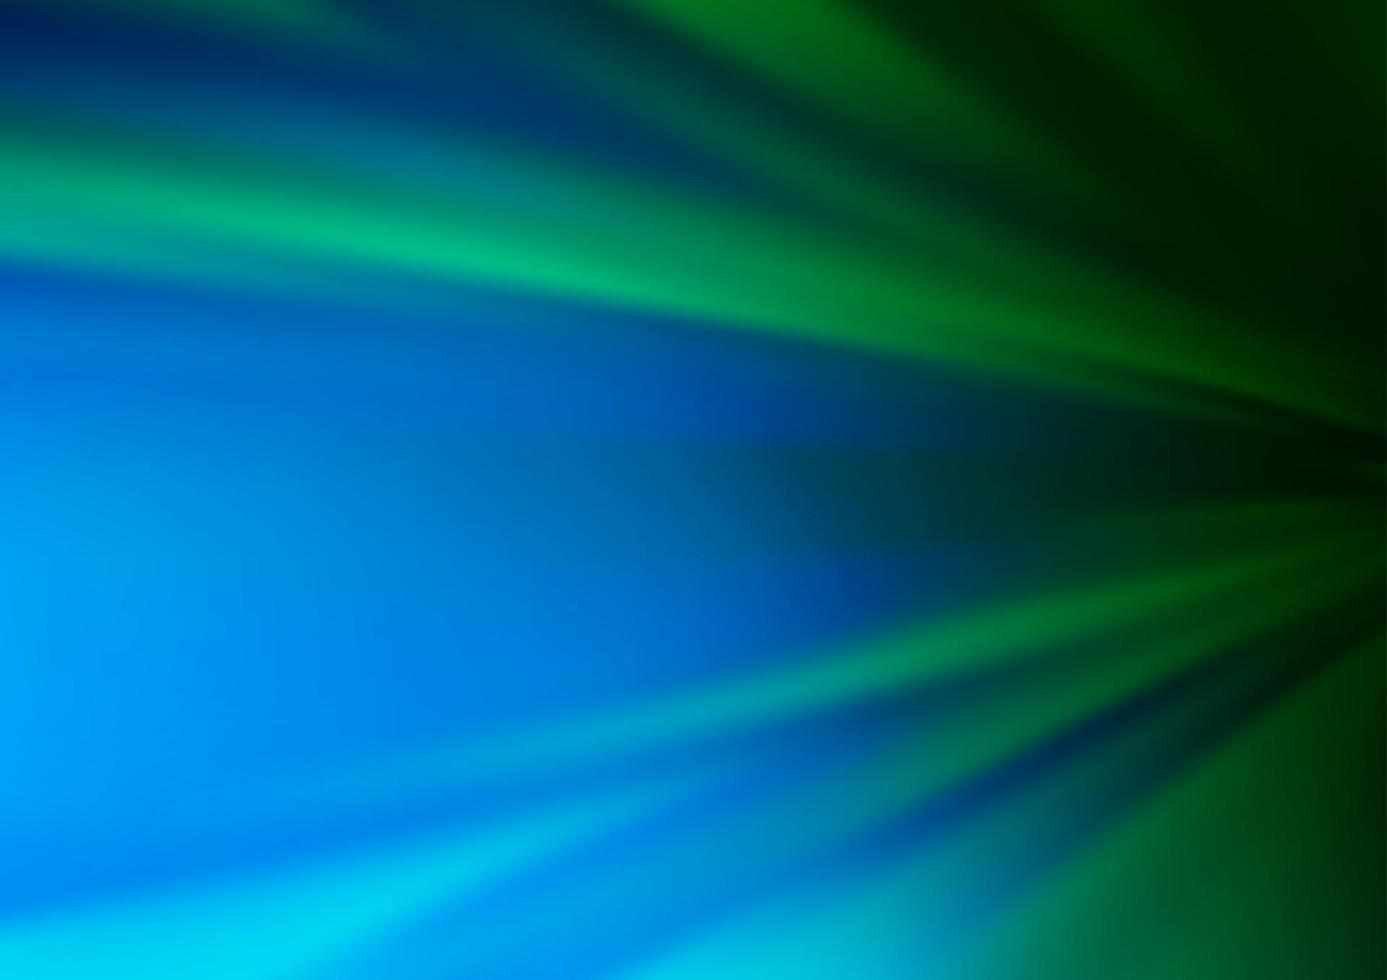 luz azul, verde vetor turva modelo abstrato de brilho.